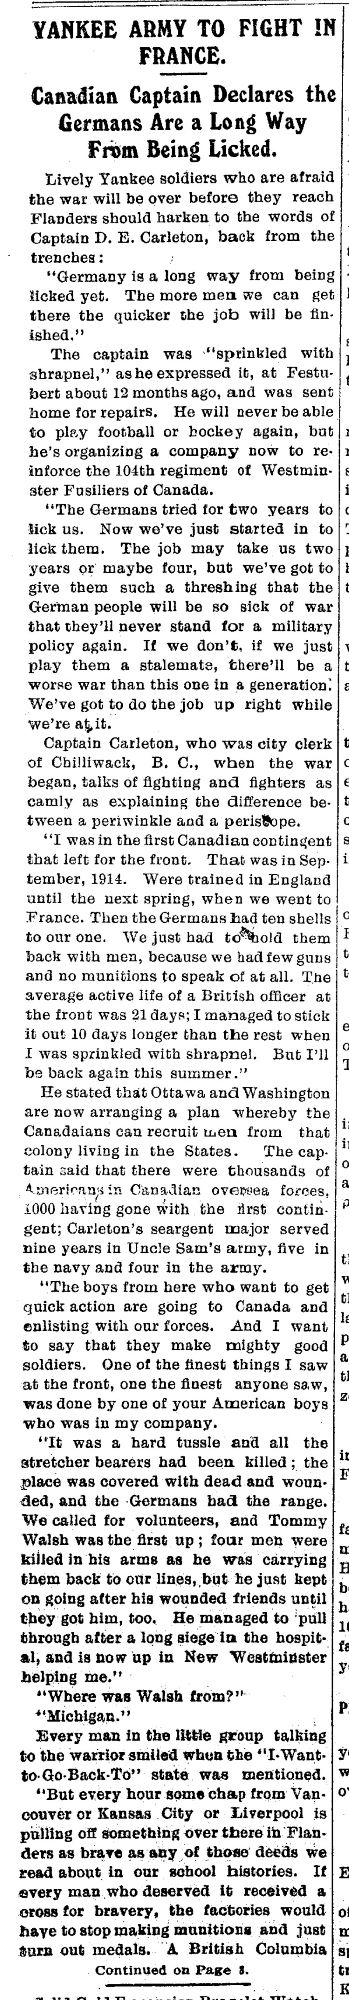 The Kincardine Reporter, May 10, 1917